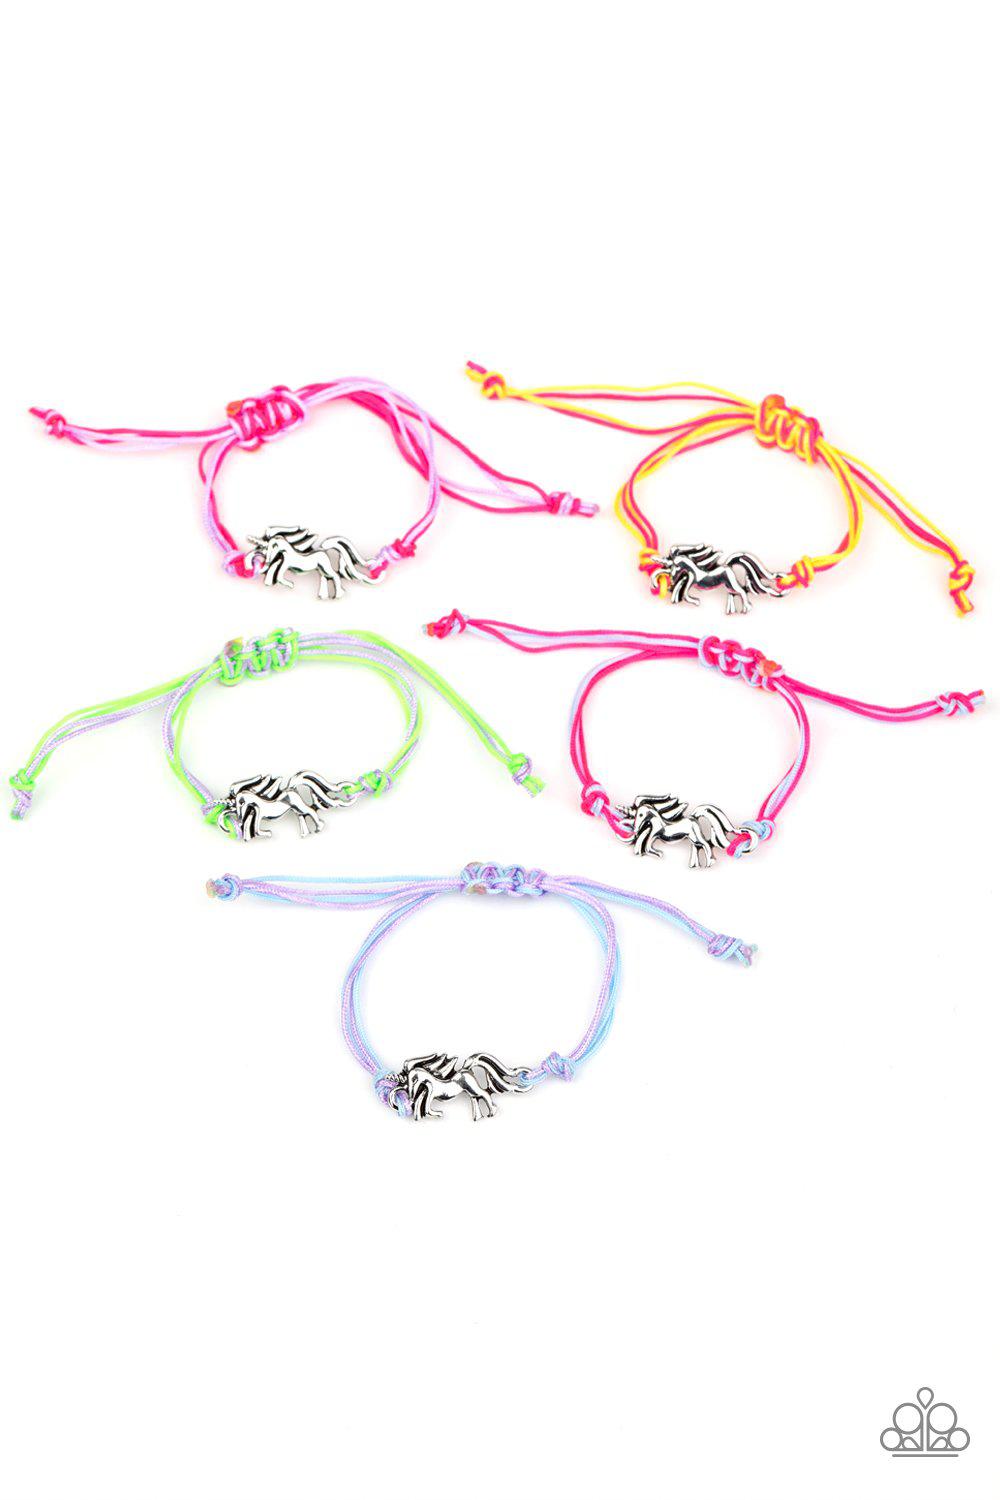 Starlet Shimmer Children&#39;s Unicorn Sliding Knot Bracelets - Paparazzi Accessories (set of 5) - Full set -CarasShop.com - $5 Jewelry by Cara Jewels